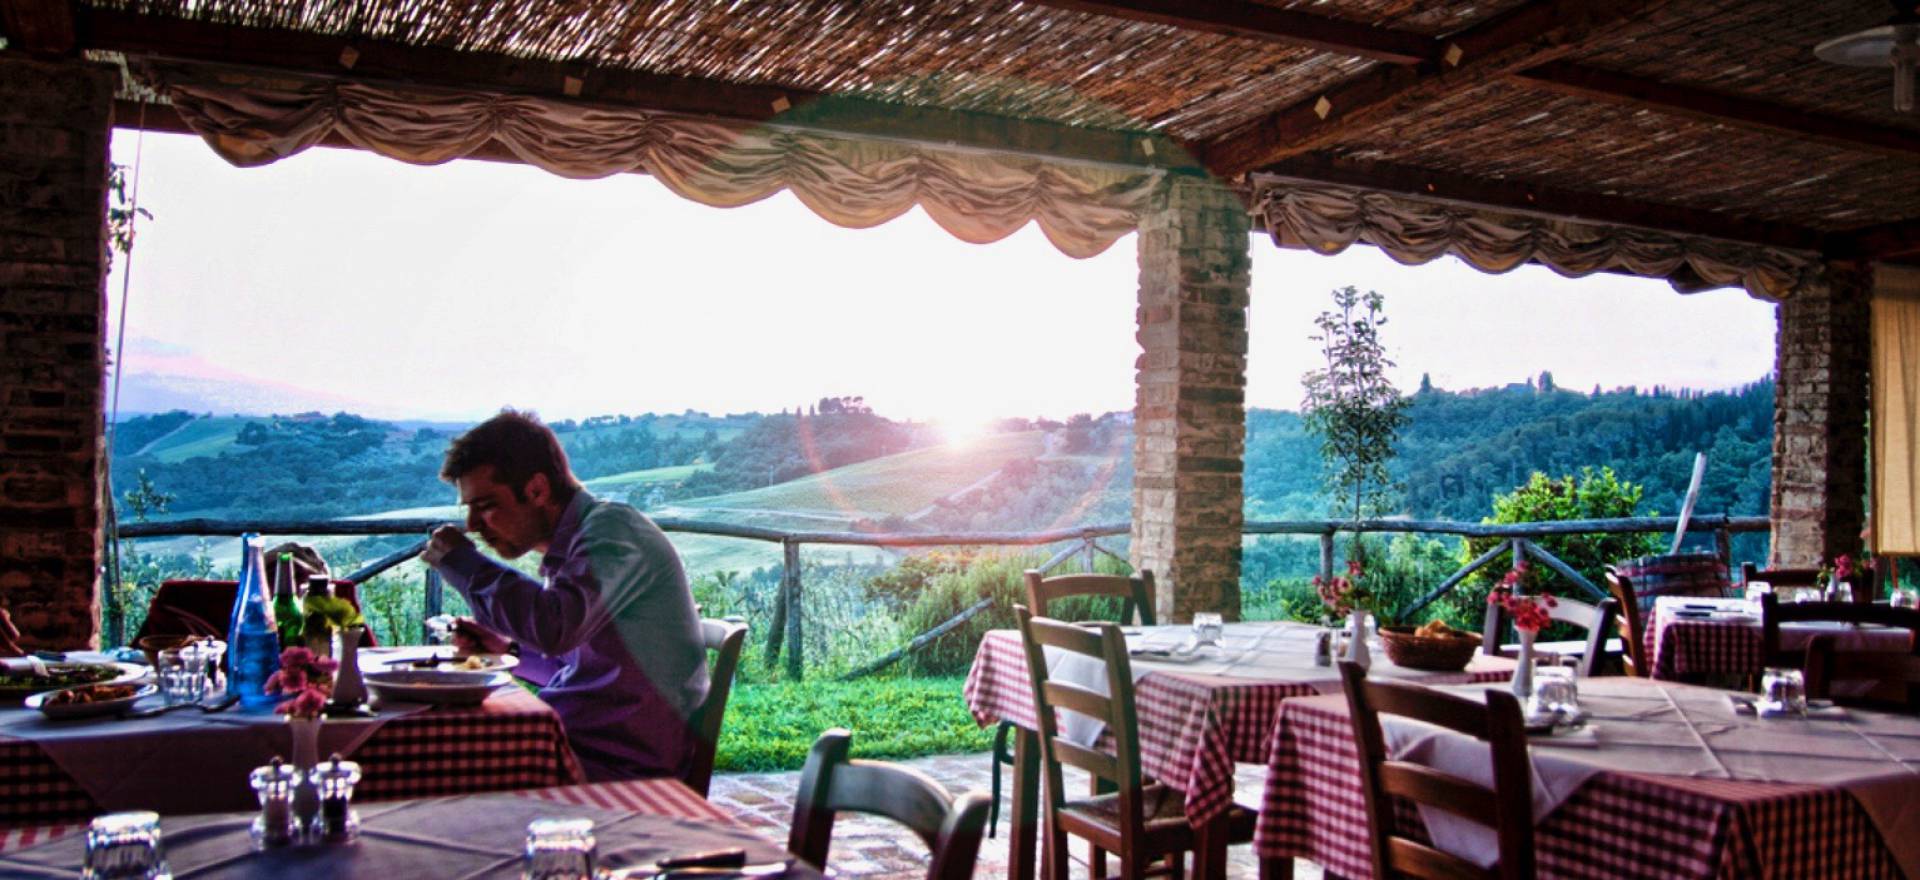 Kindvriendelijke agriturismo in Toscane met restaurant